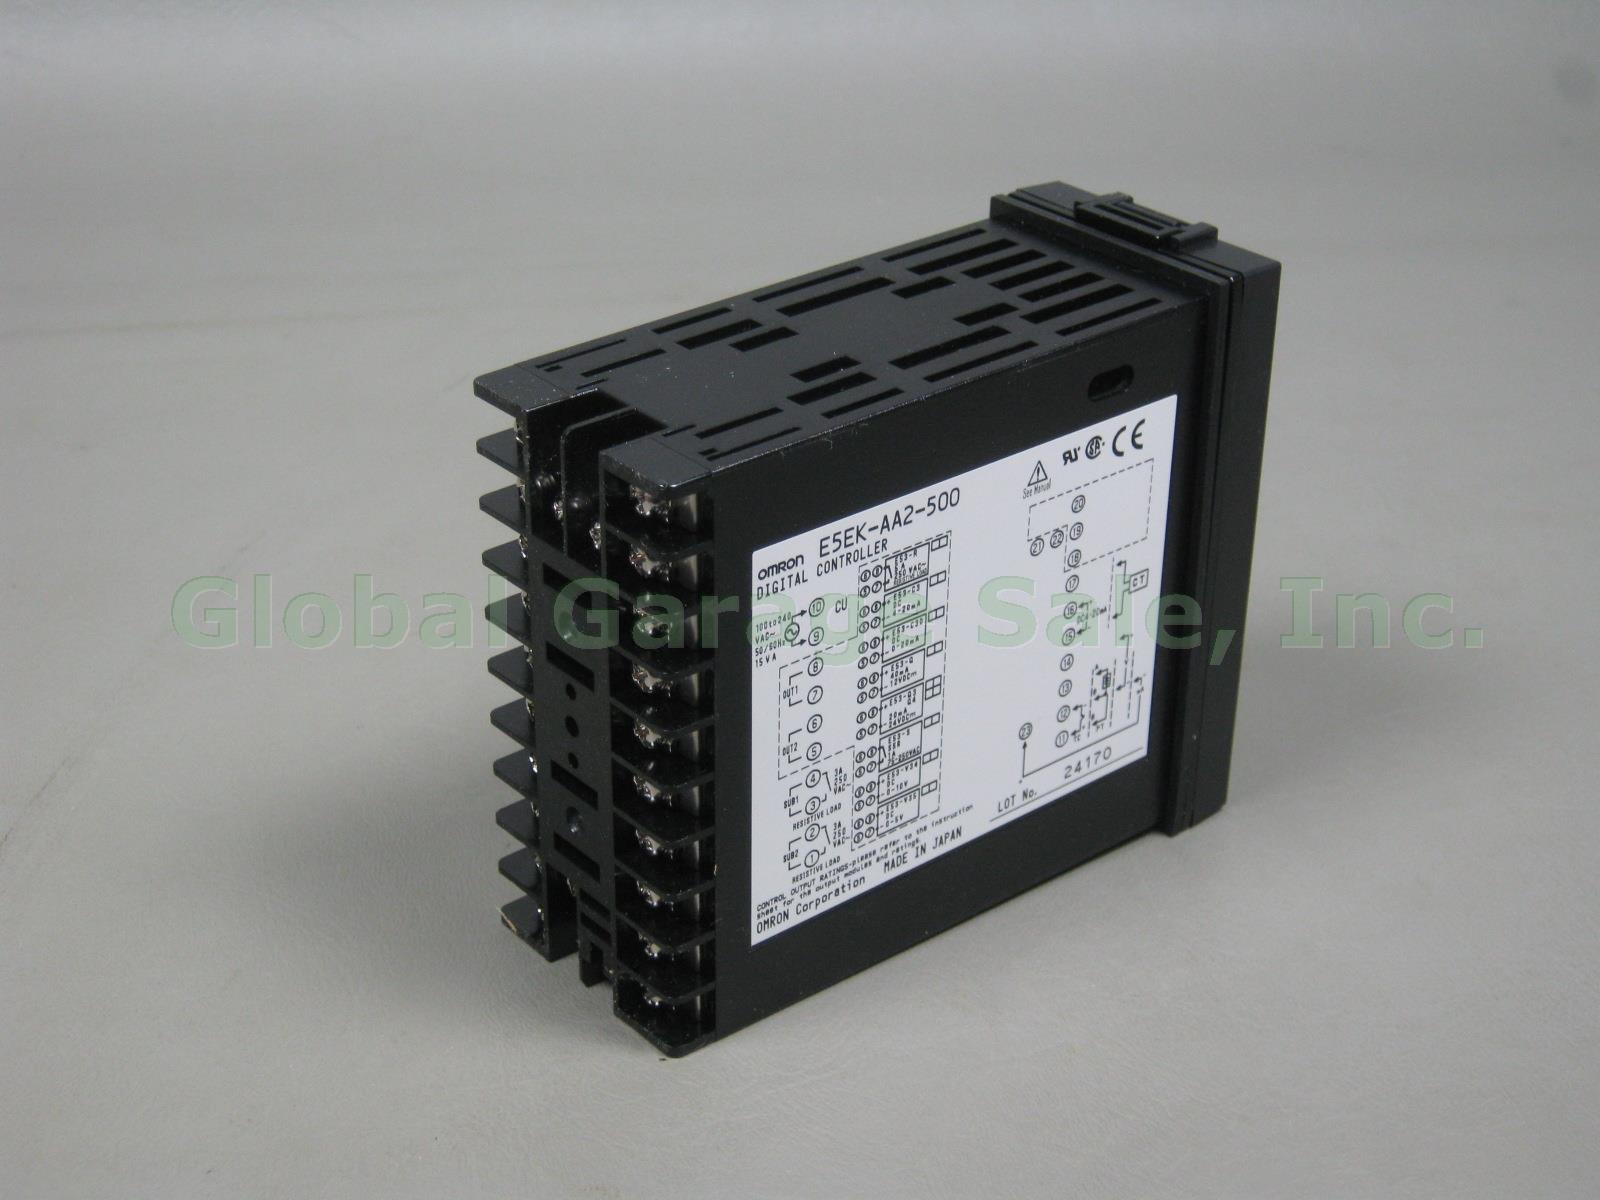 New Omron E5EK-AA2-500 Digital Controller Multi-Range Input 100-240V AC Volts NR 2